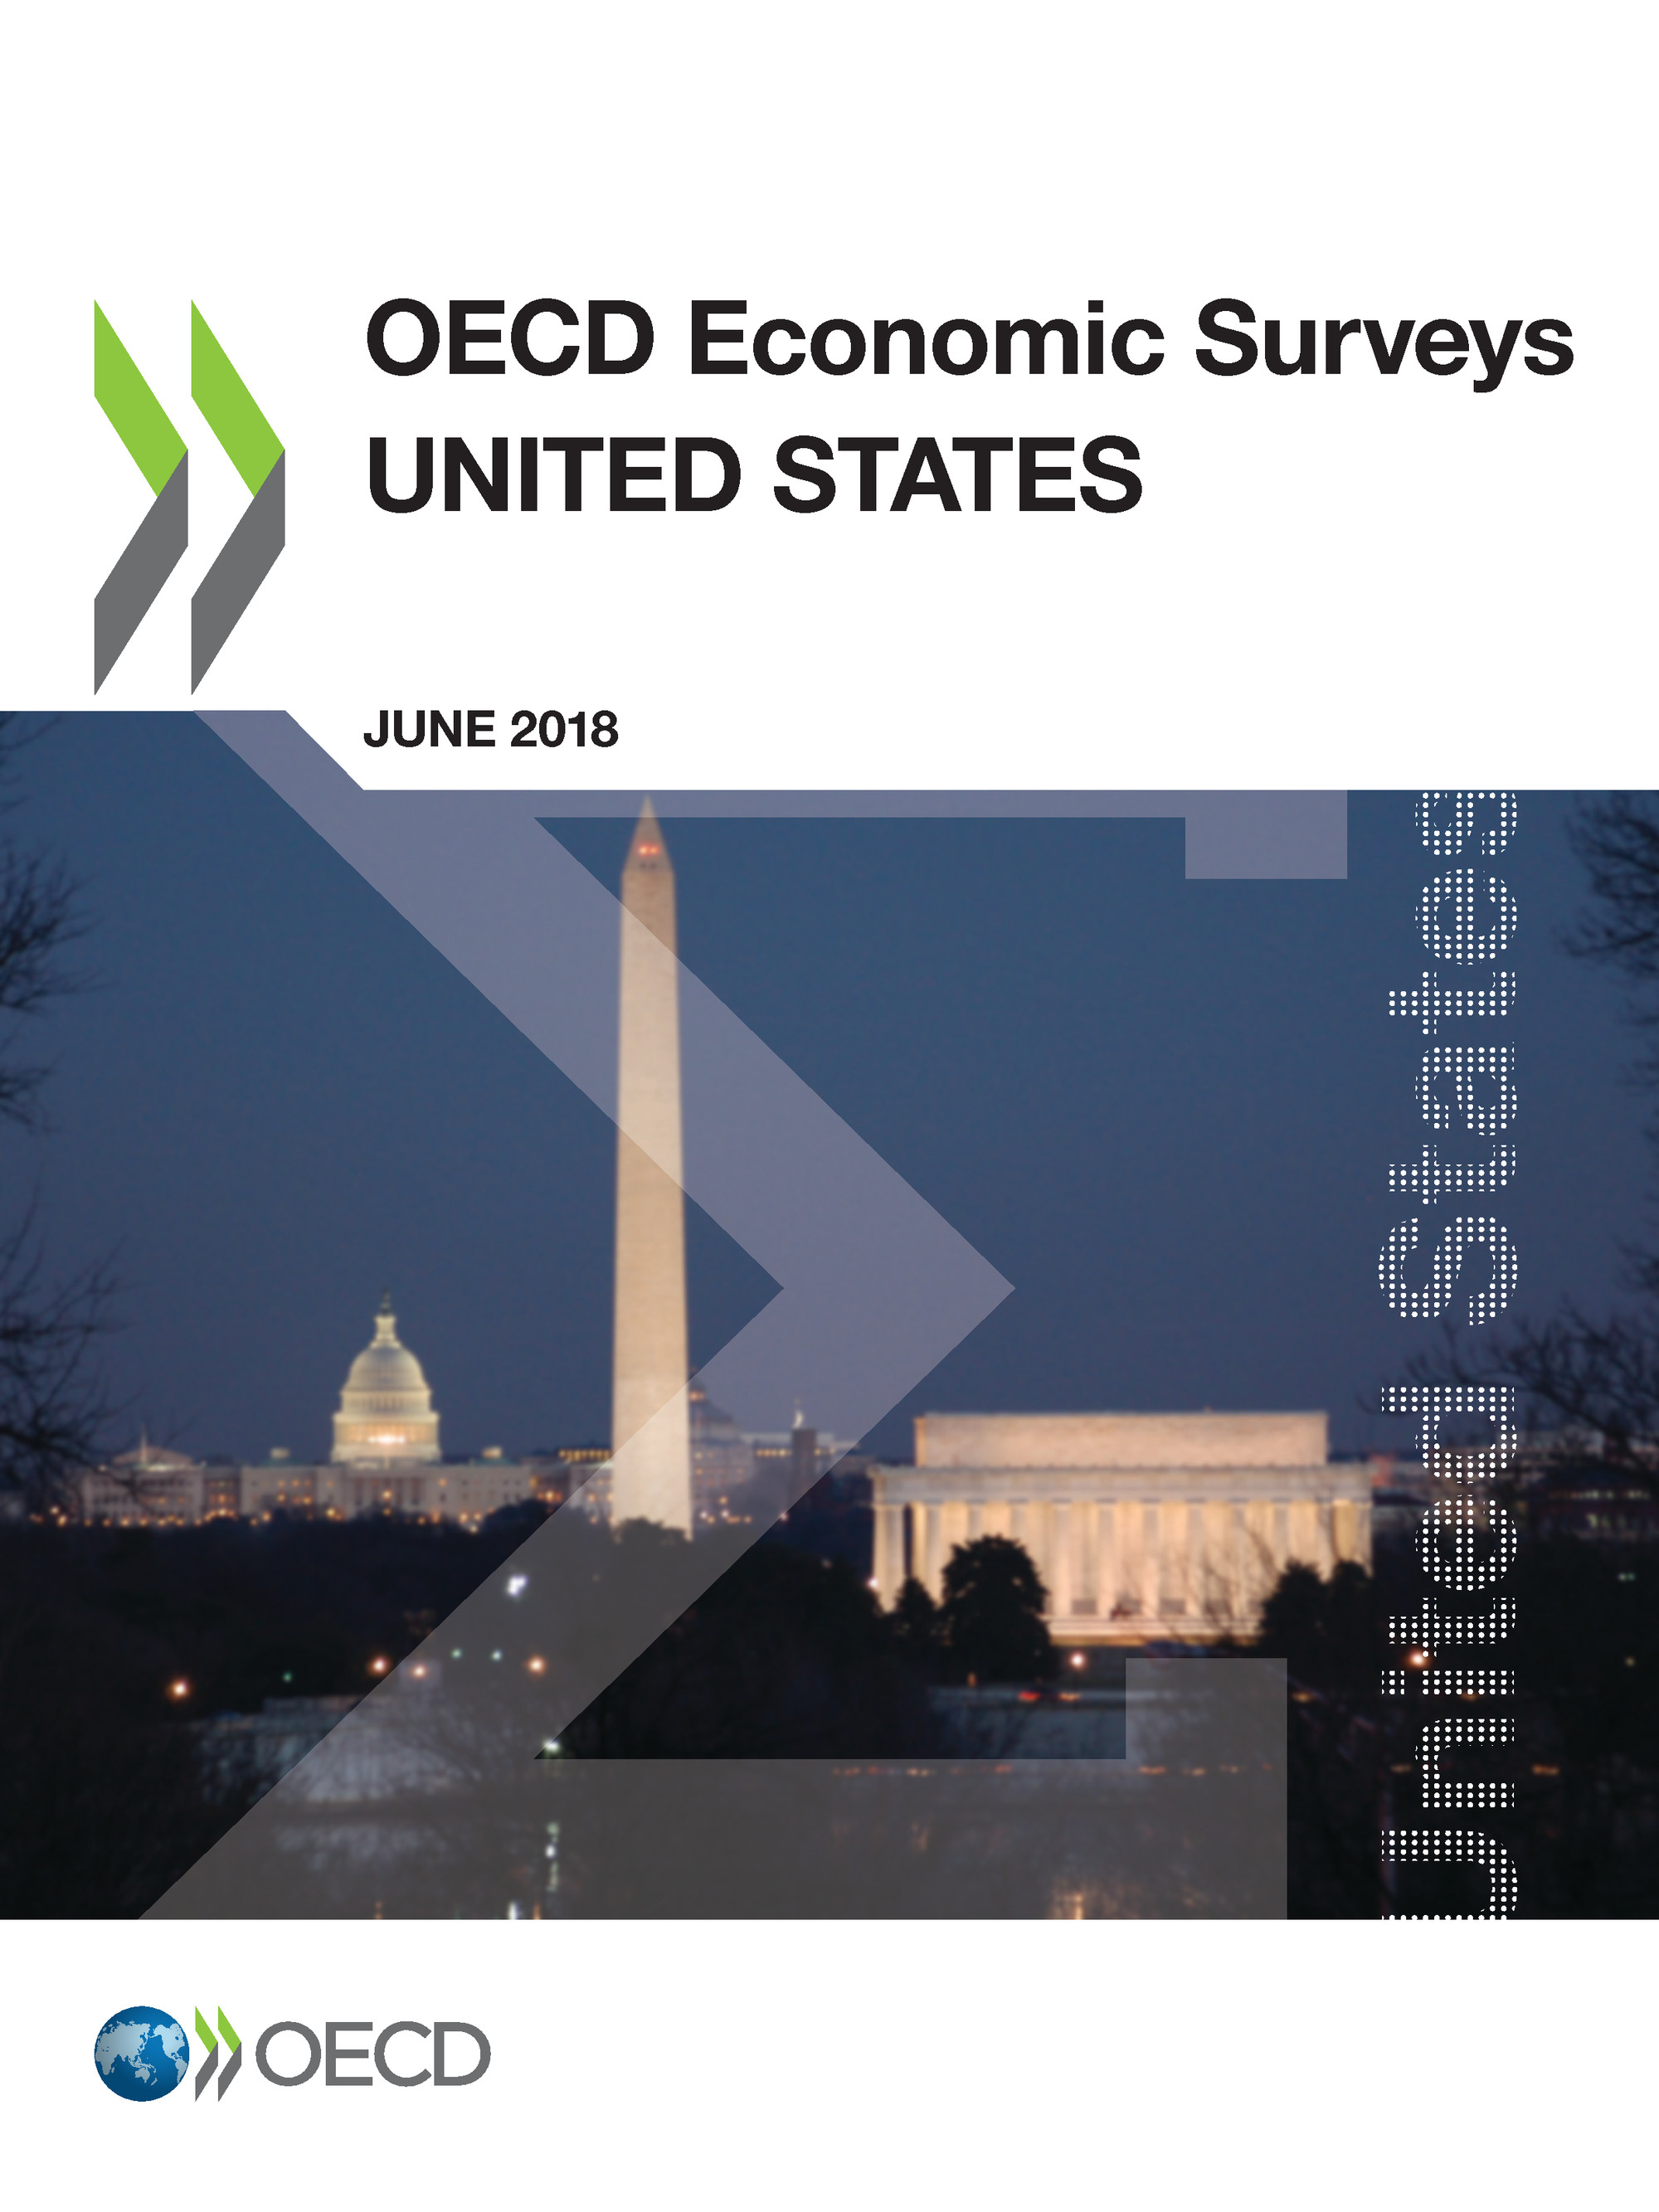 OECD Economic Surveys: United States 2018 -  Collectif - OCDE / OECD